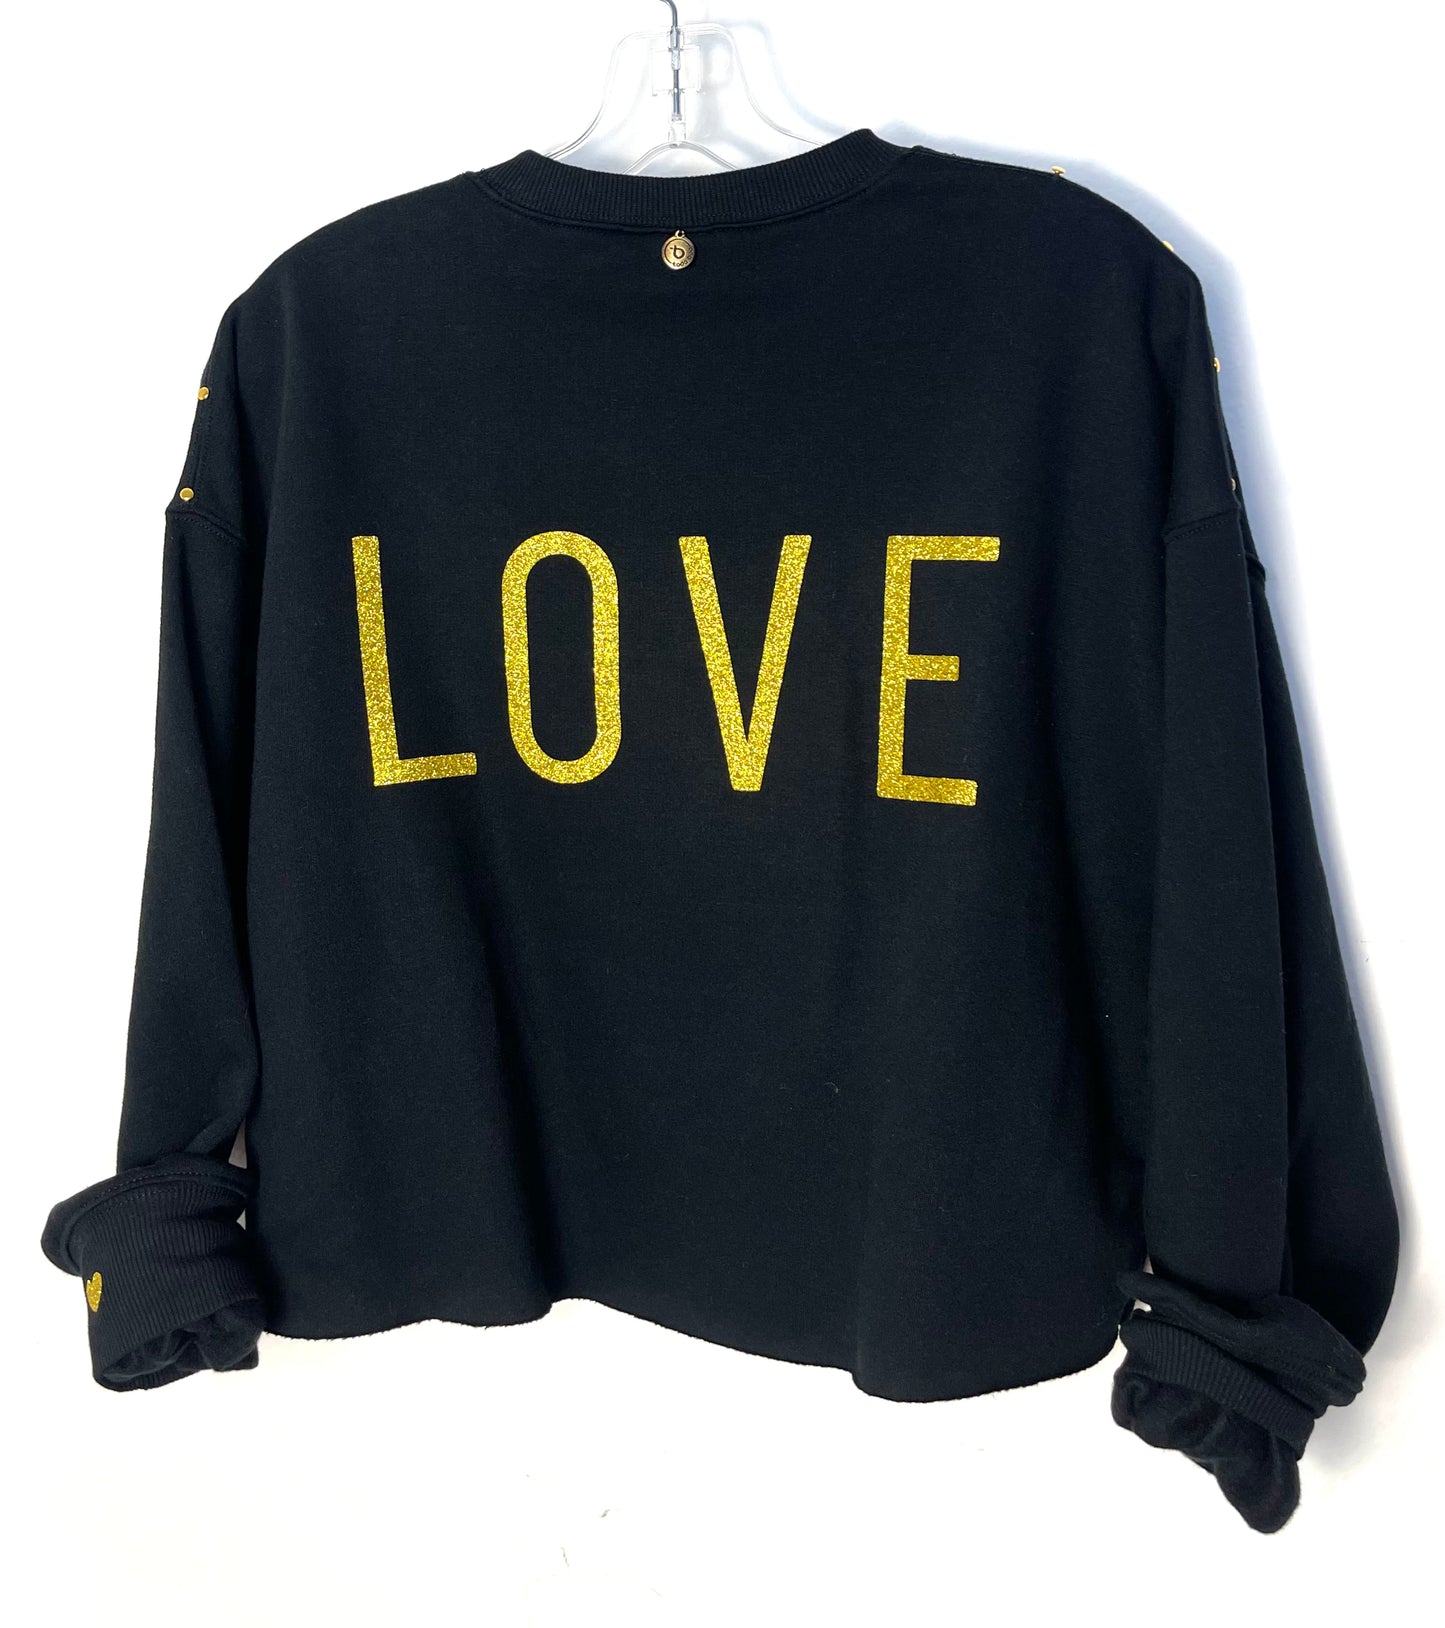 Rock & Love Cropped Sweatshirt & Shorts - 2 Pieces Set